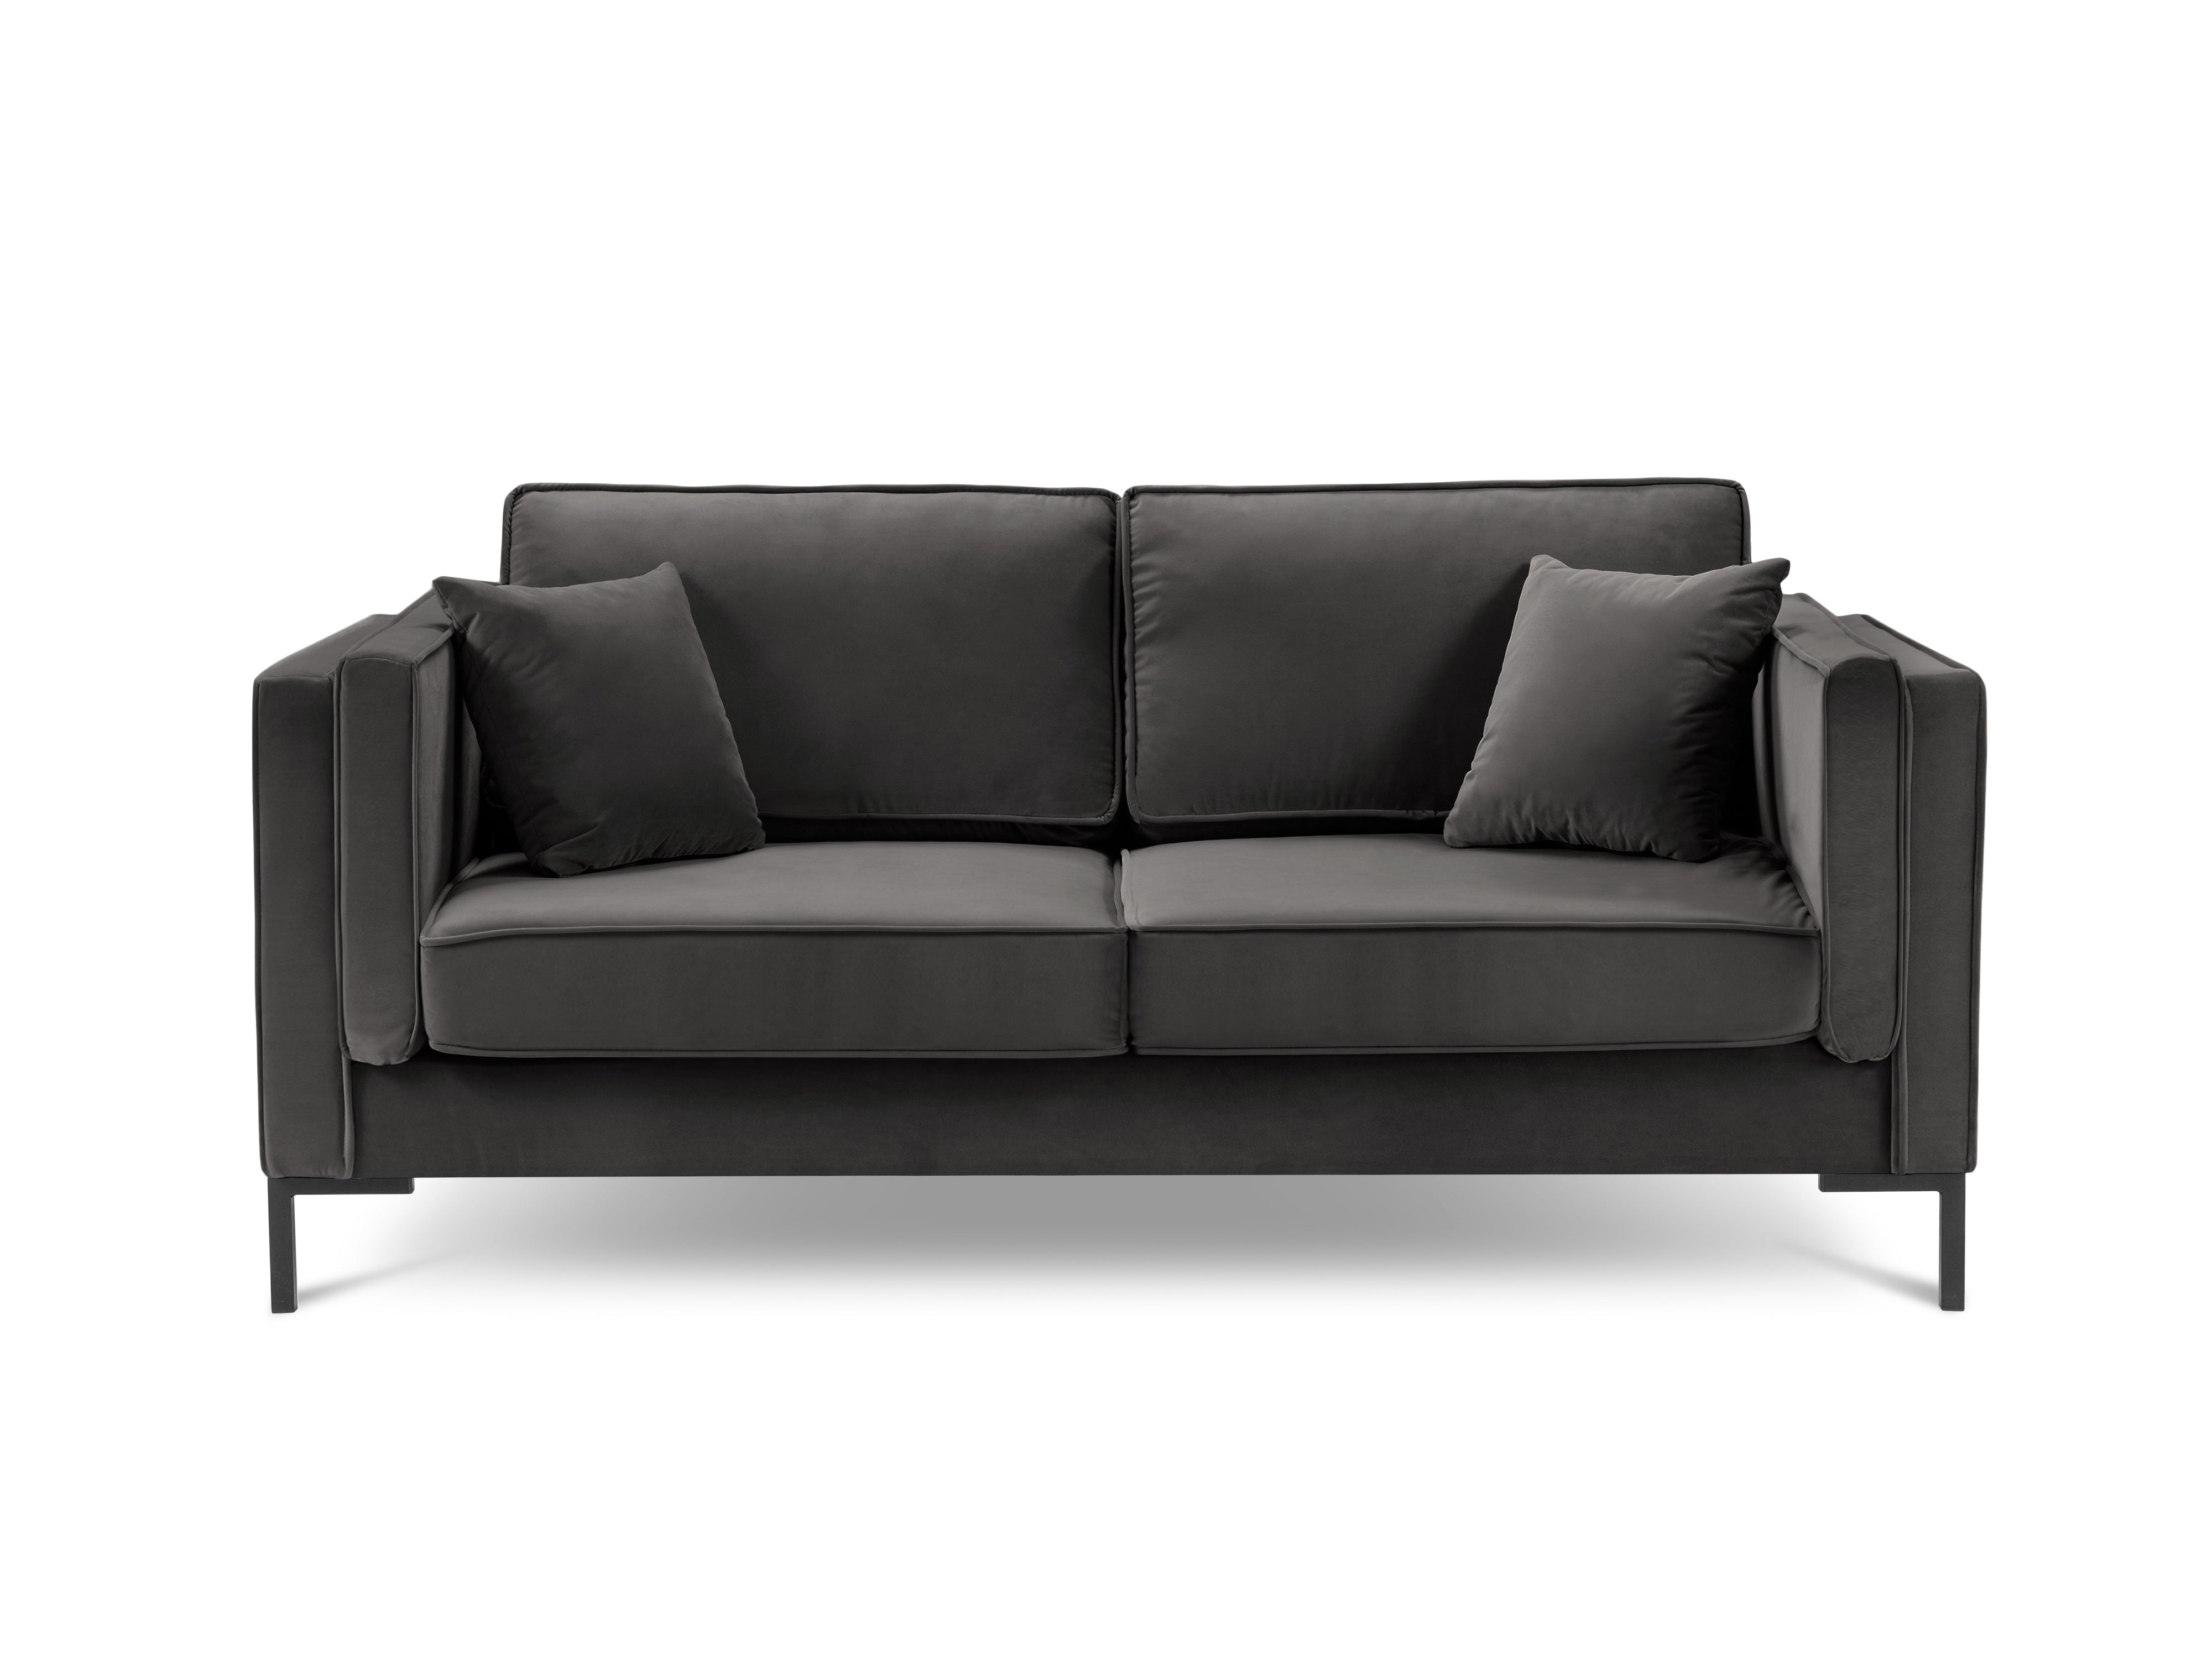 LUIS dark grey velvet 2-seater sofa with black base